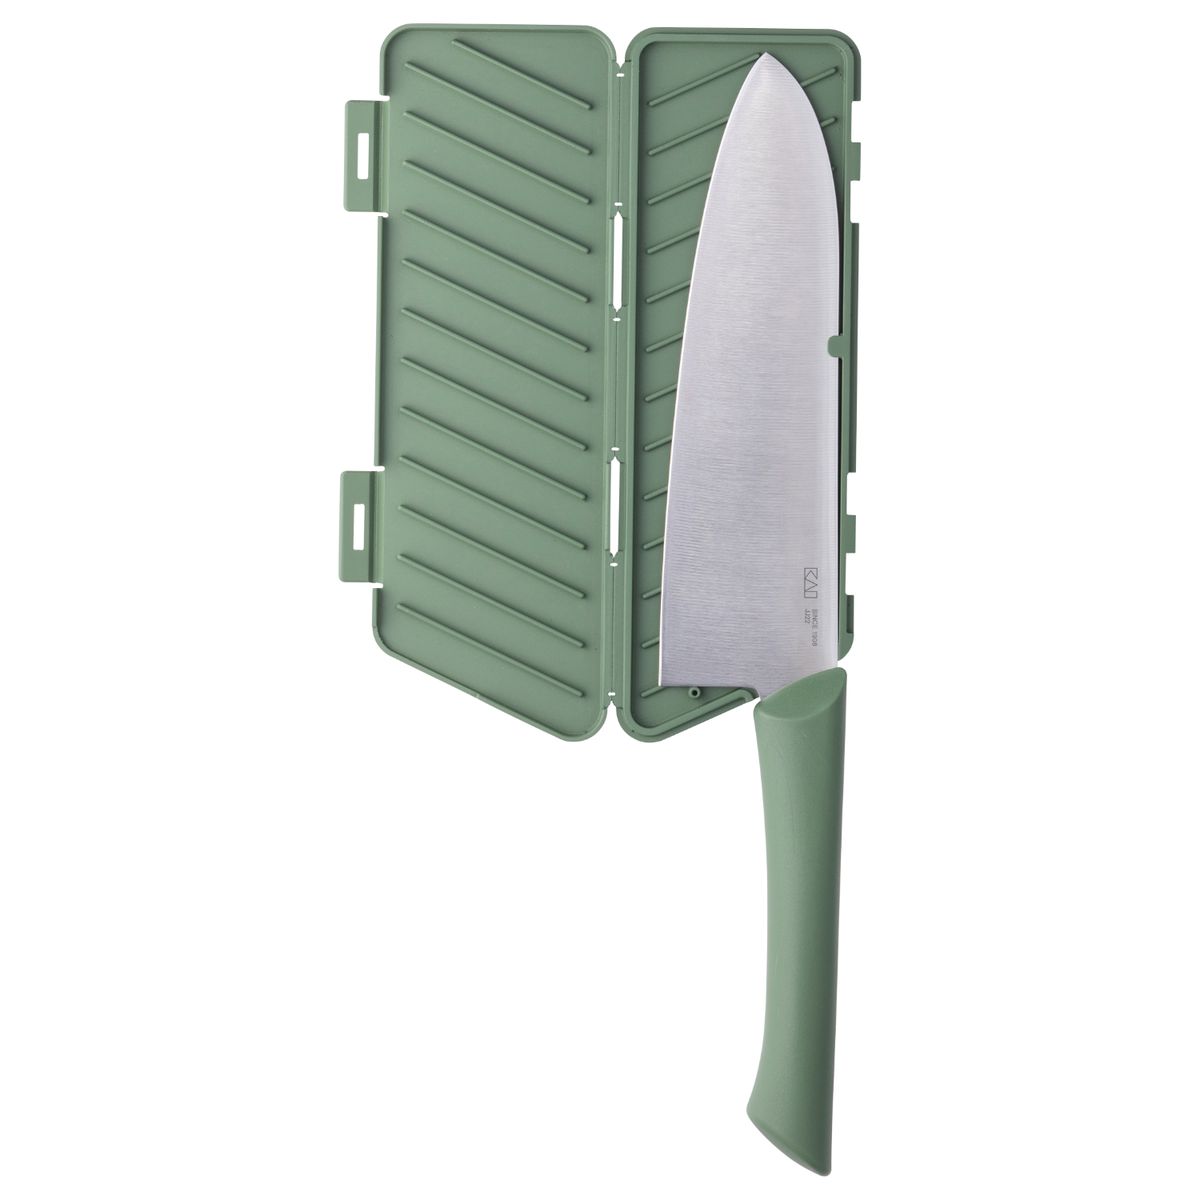 KAI MANASAYA 三徳包丁 ナイフ 165mm グリーン グリーン 鞘 サヤ付 マナ板 アウトドア 食洗器対応 ステンレス 衛生的